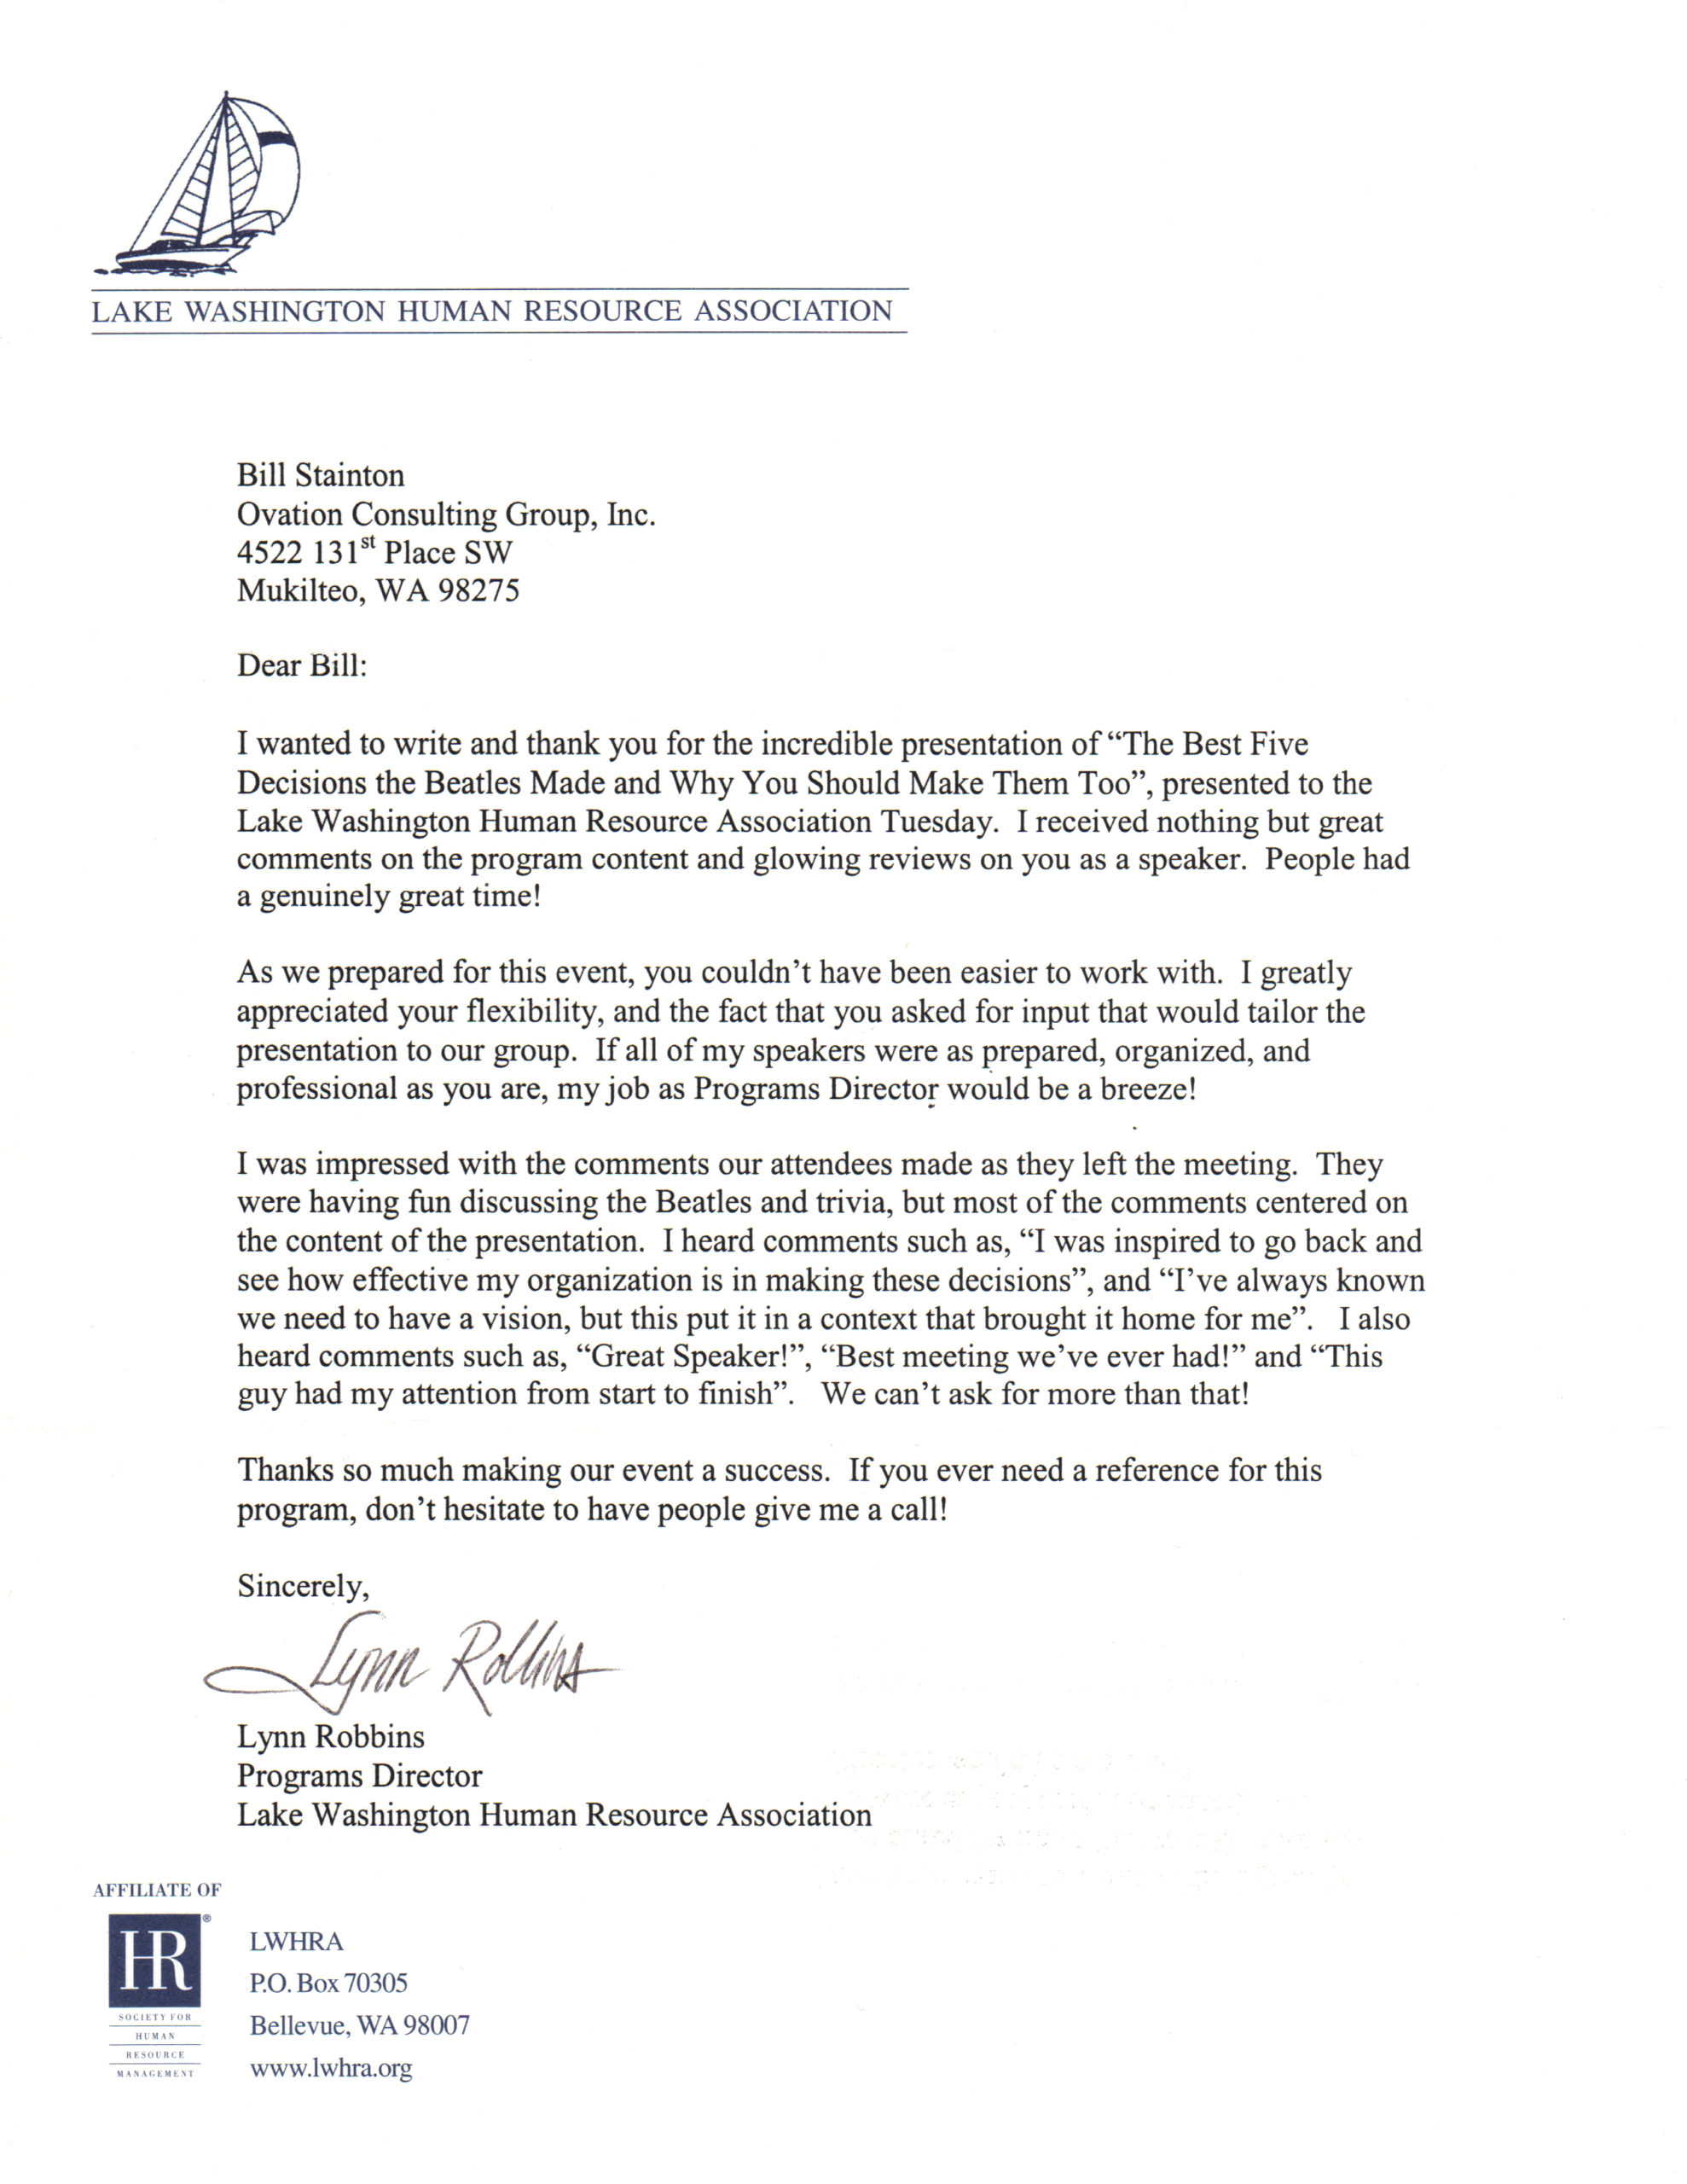 Lk. WA Human Resources testimonial letter - The Executive Producer